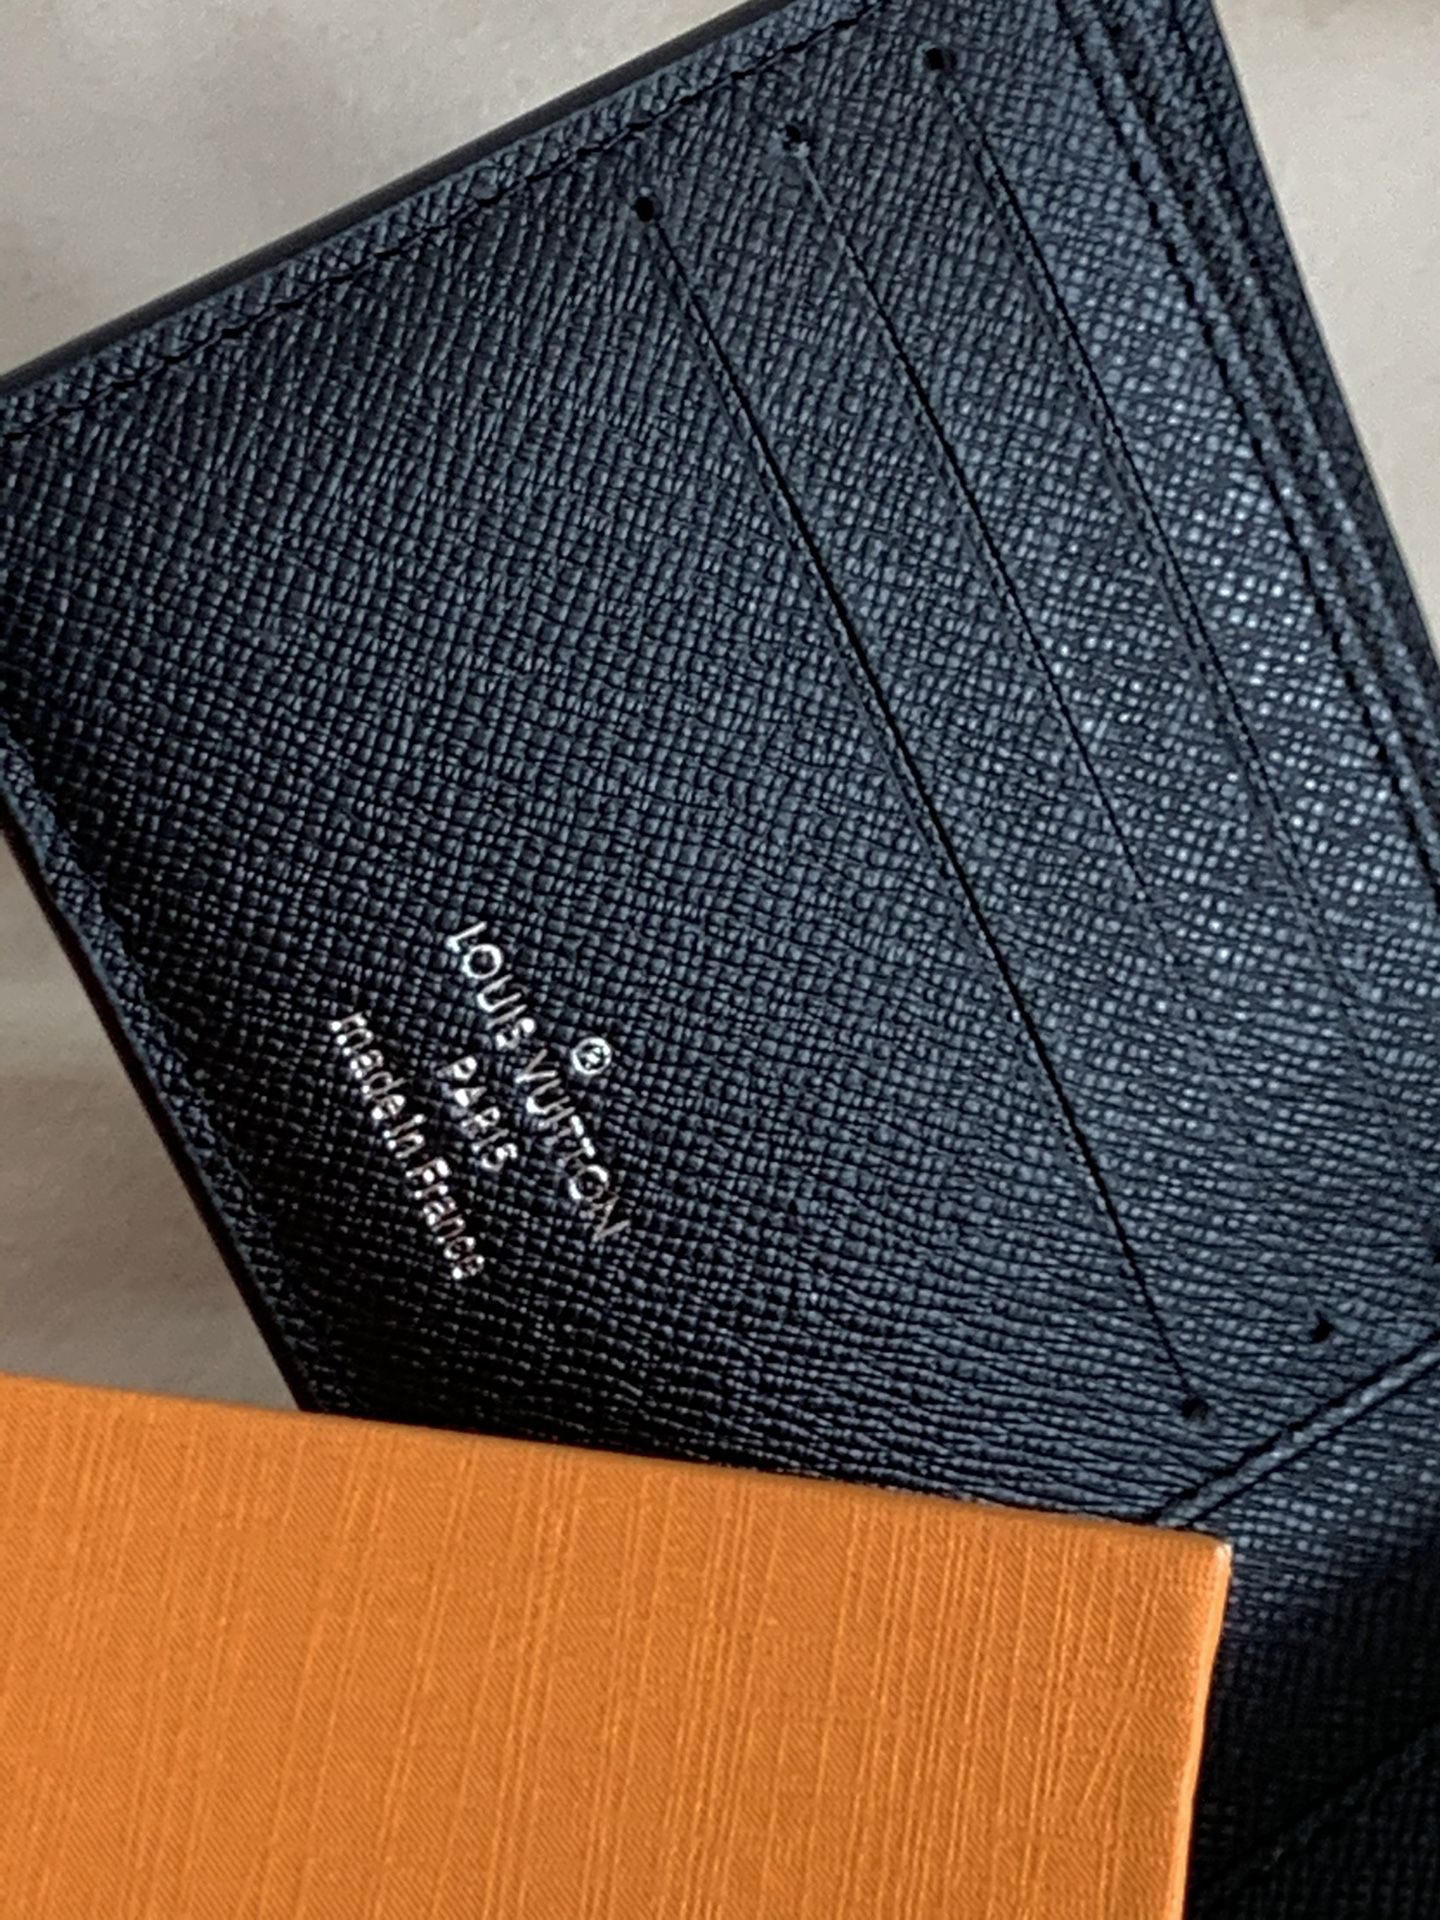 Men's Louis Vuitton Wallet for Sale in Queens, NY - OfferUp